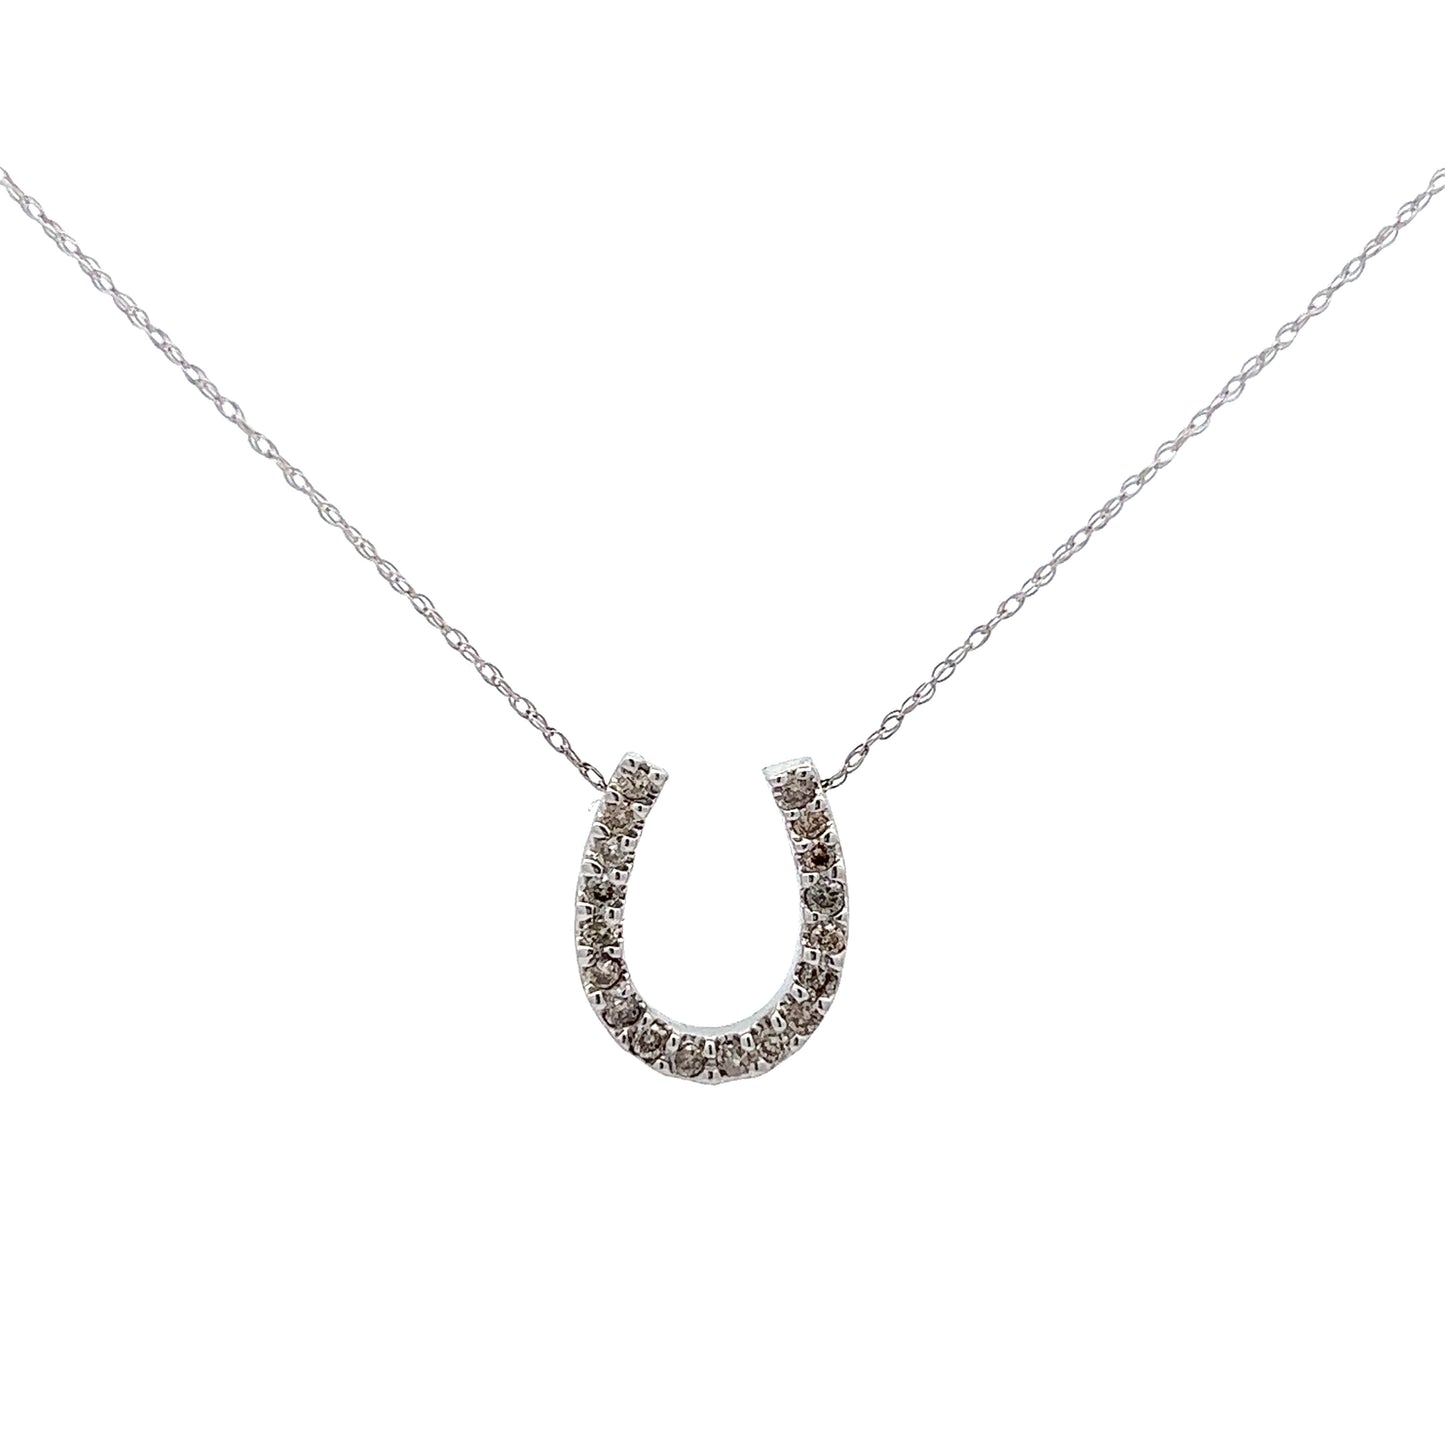 Horseshoe Diamond Pendant Necklace in 14k White Gold